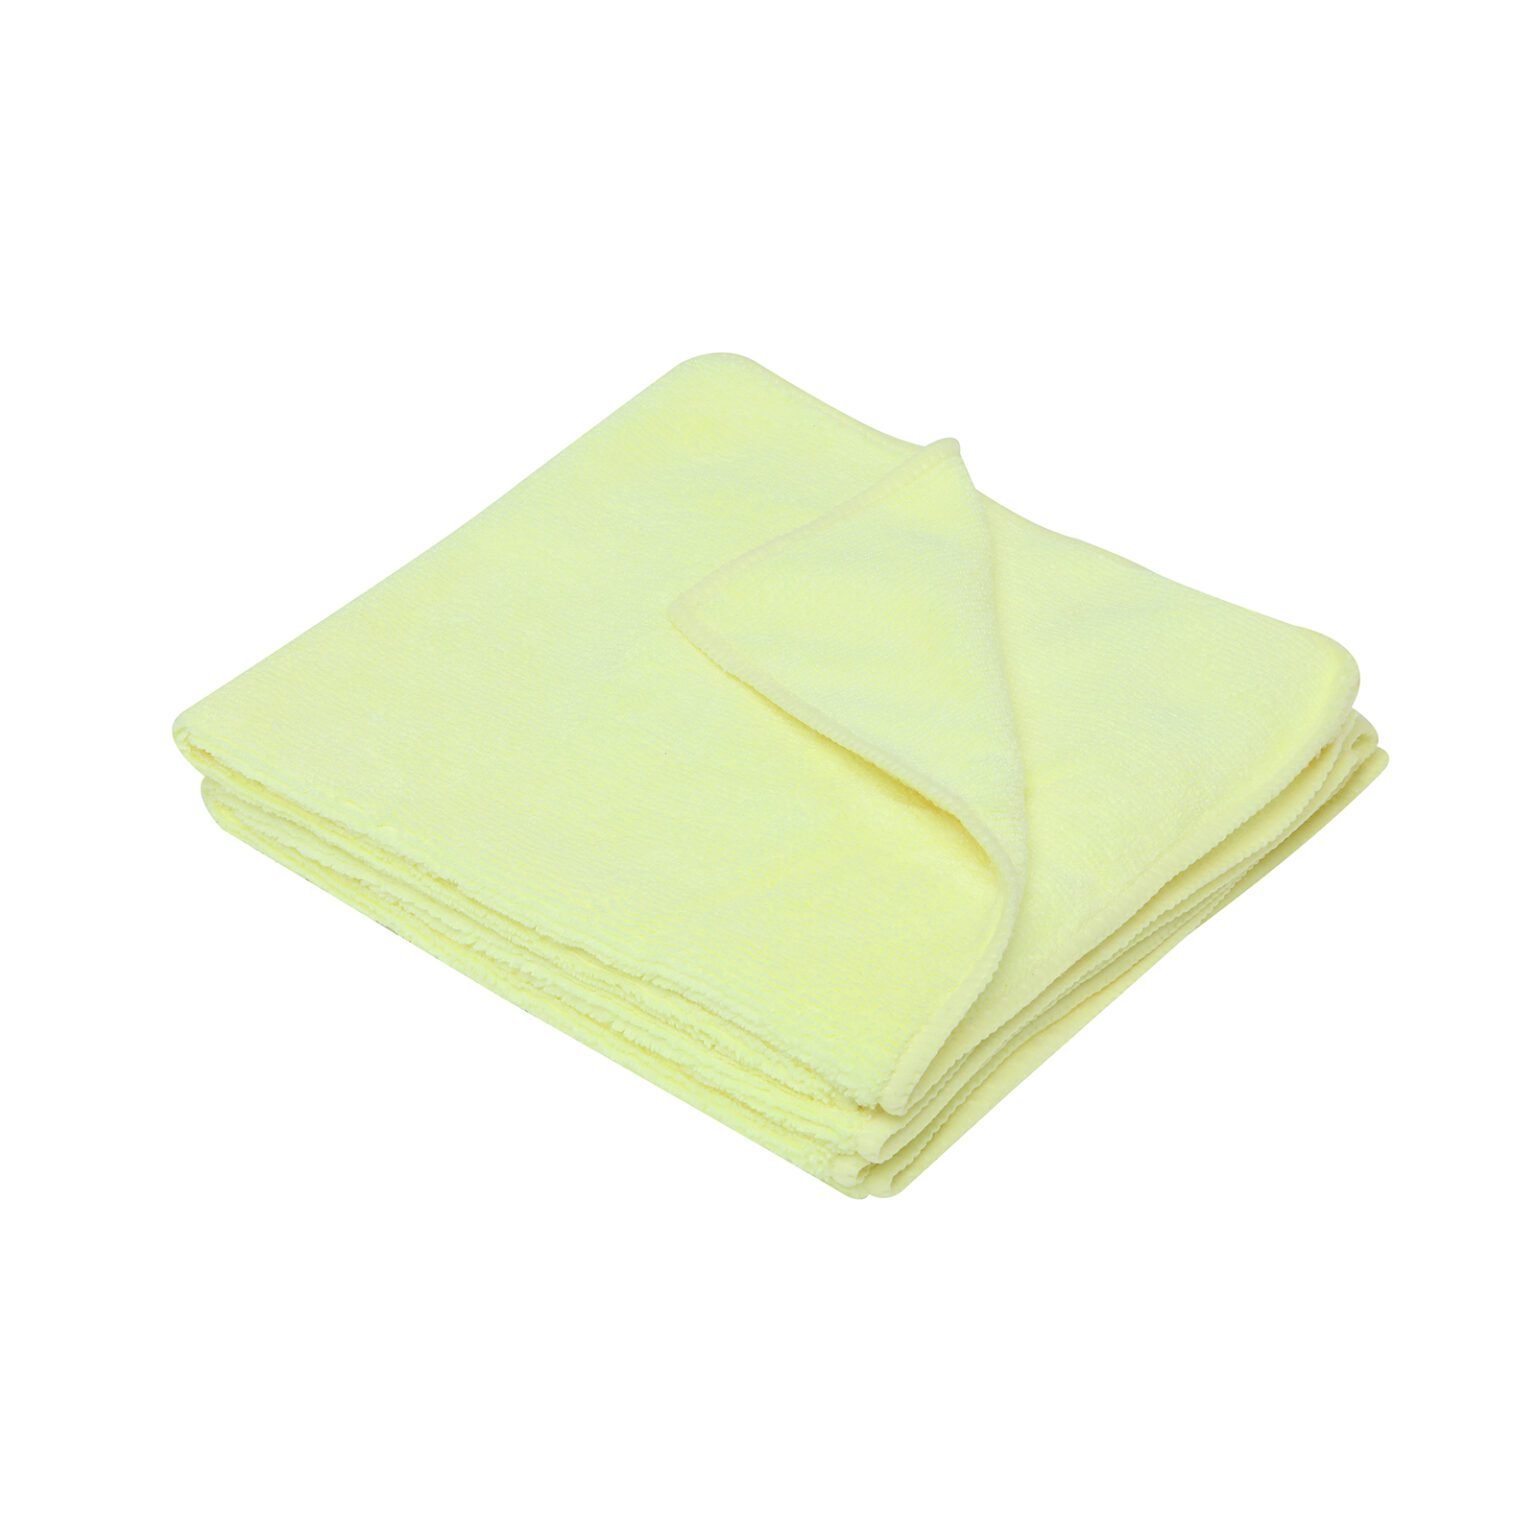 58013-merrifibre-cloth-yellow